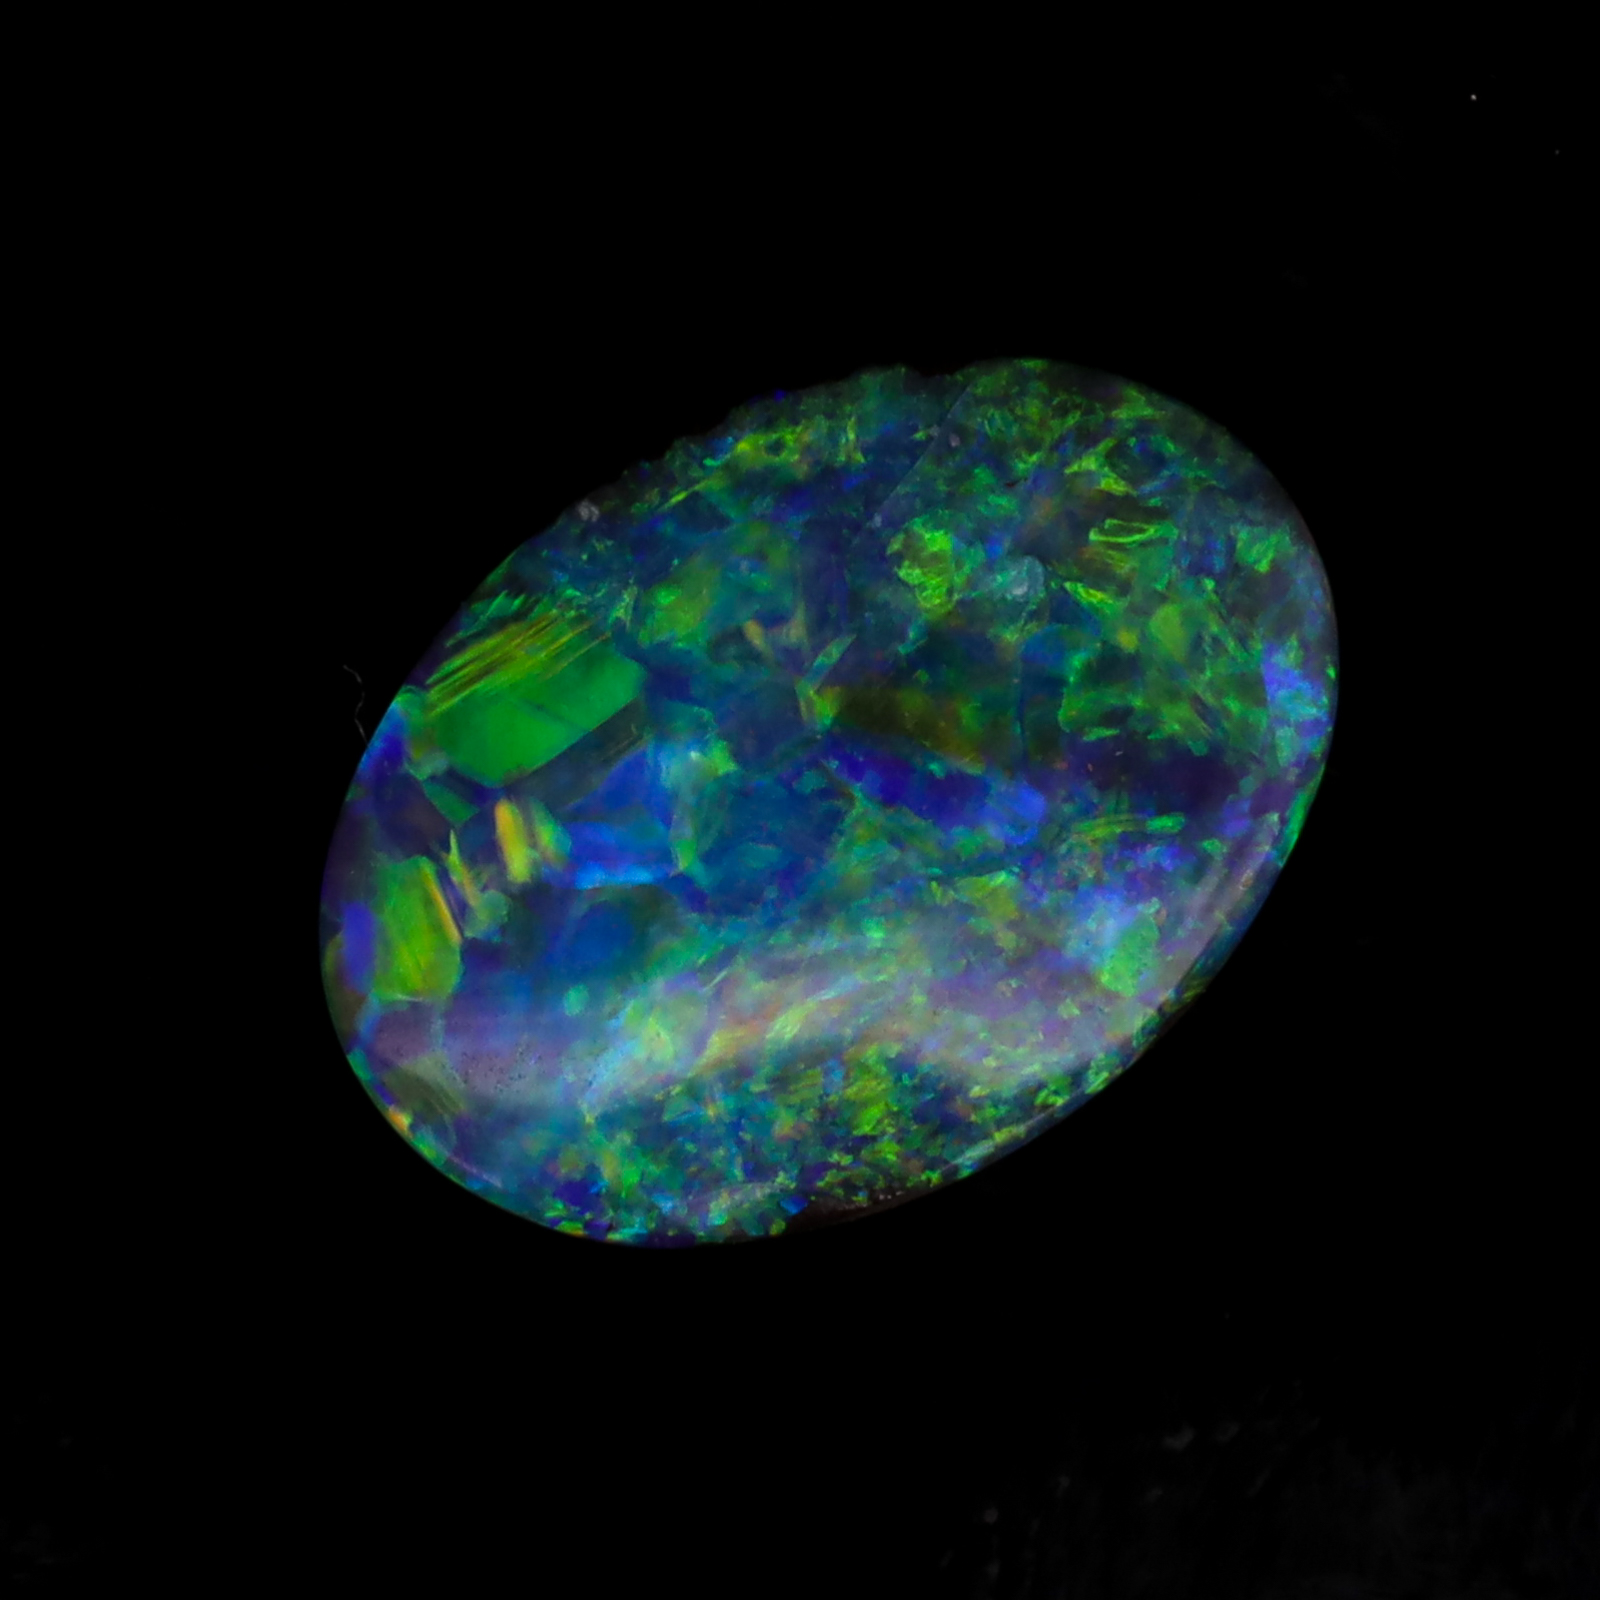 Australian Unset Blue Green Yellow Orange Boulder Opal